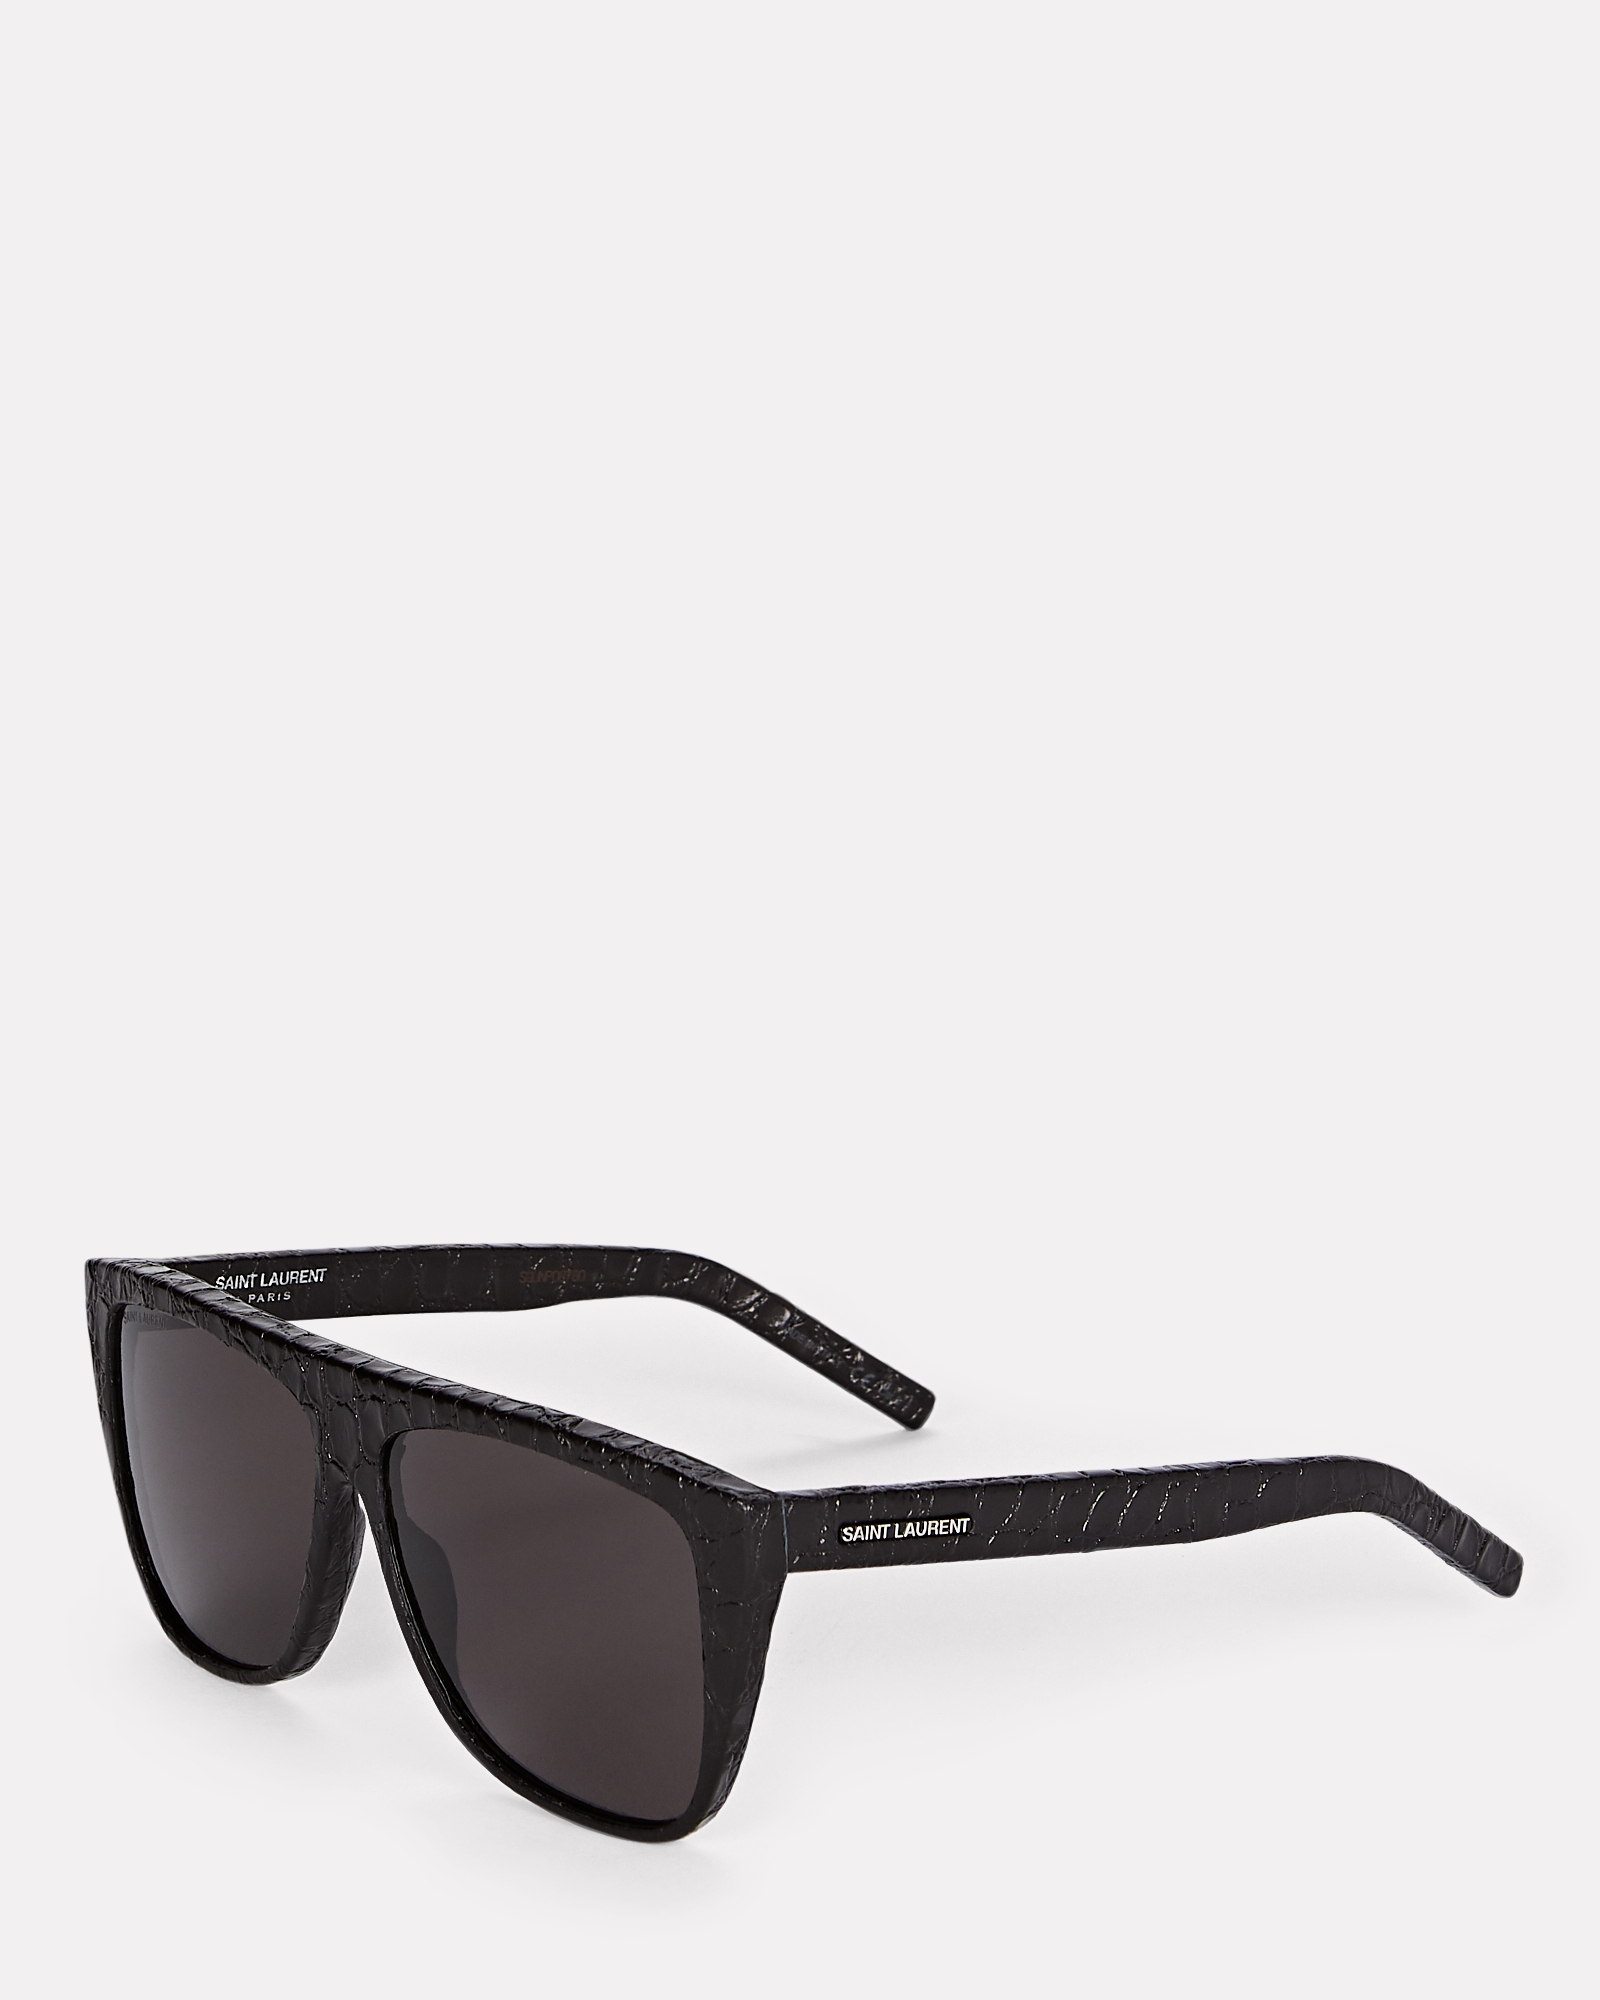 New Wave SL 1 Sunglasses